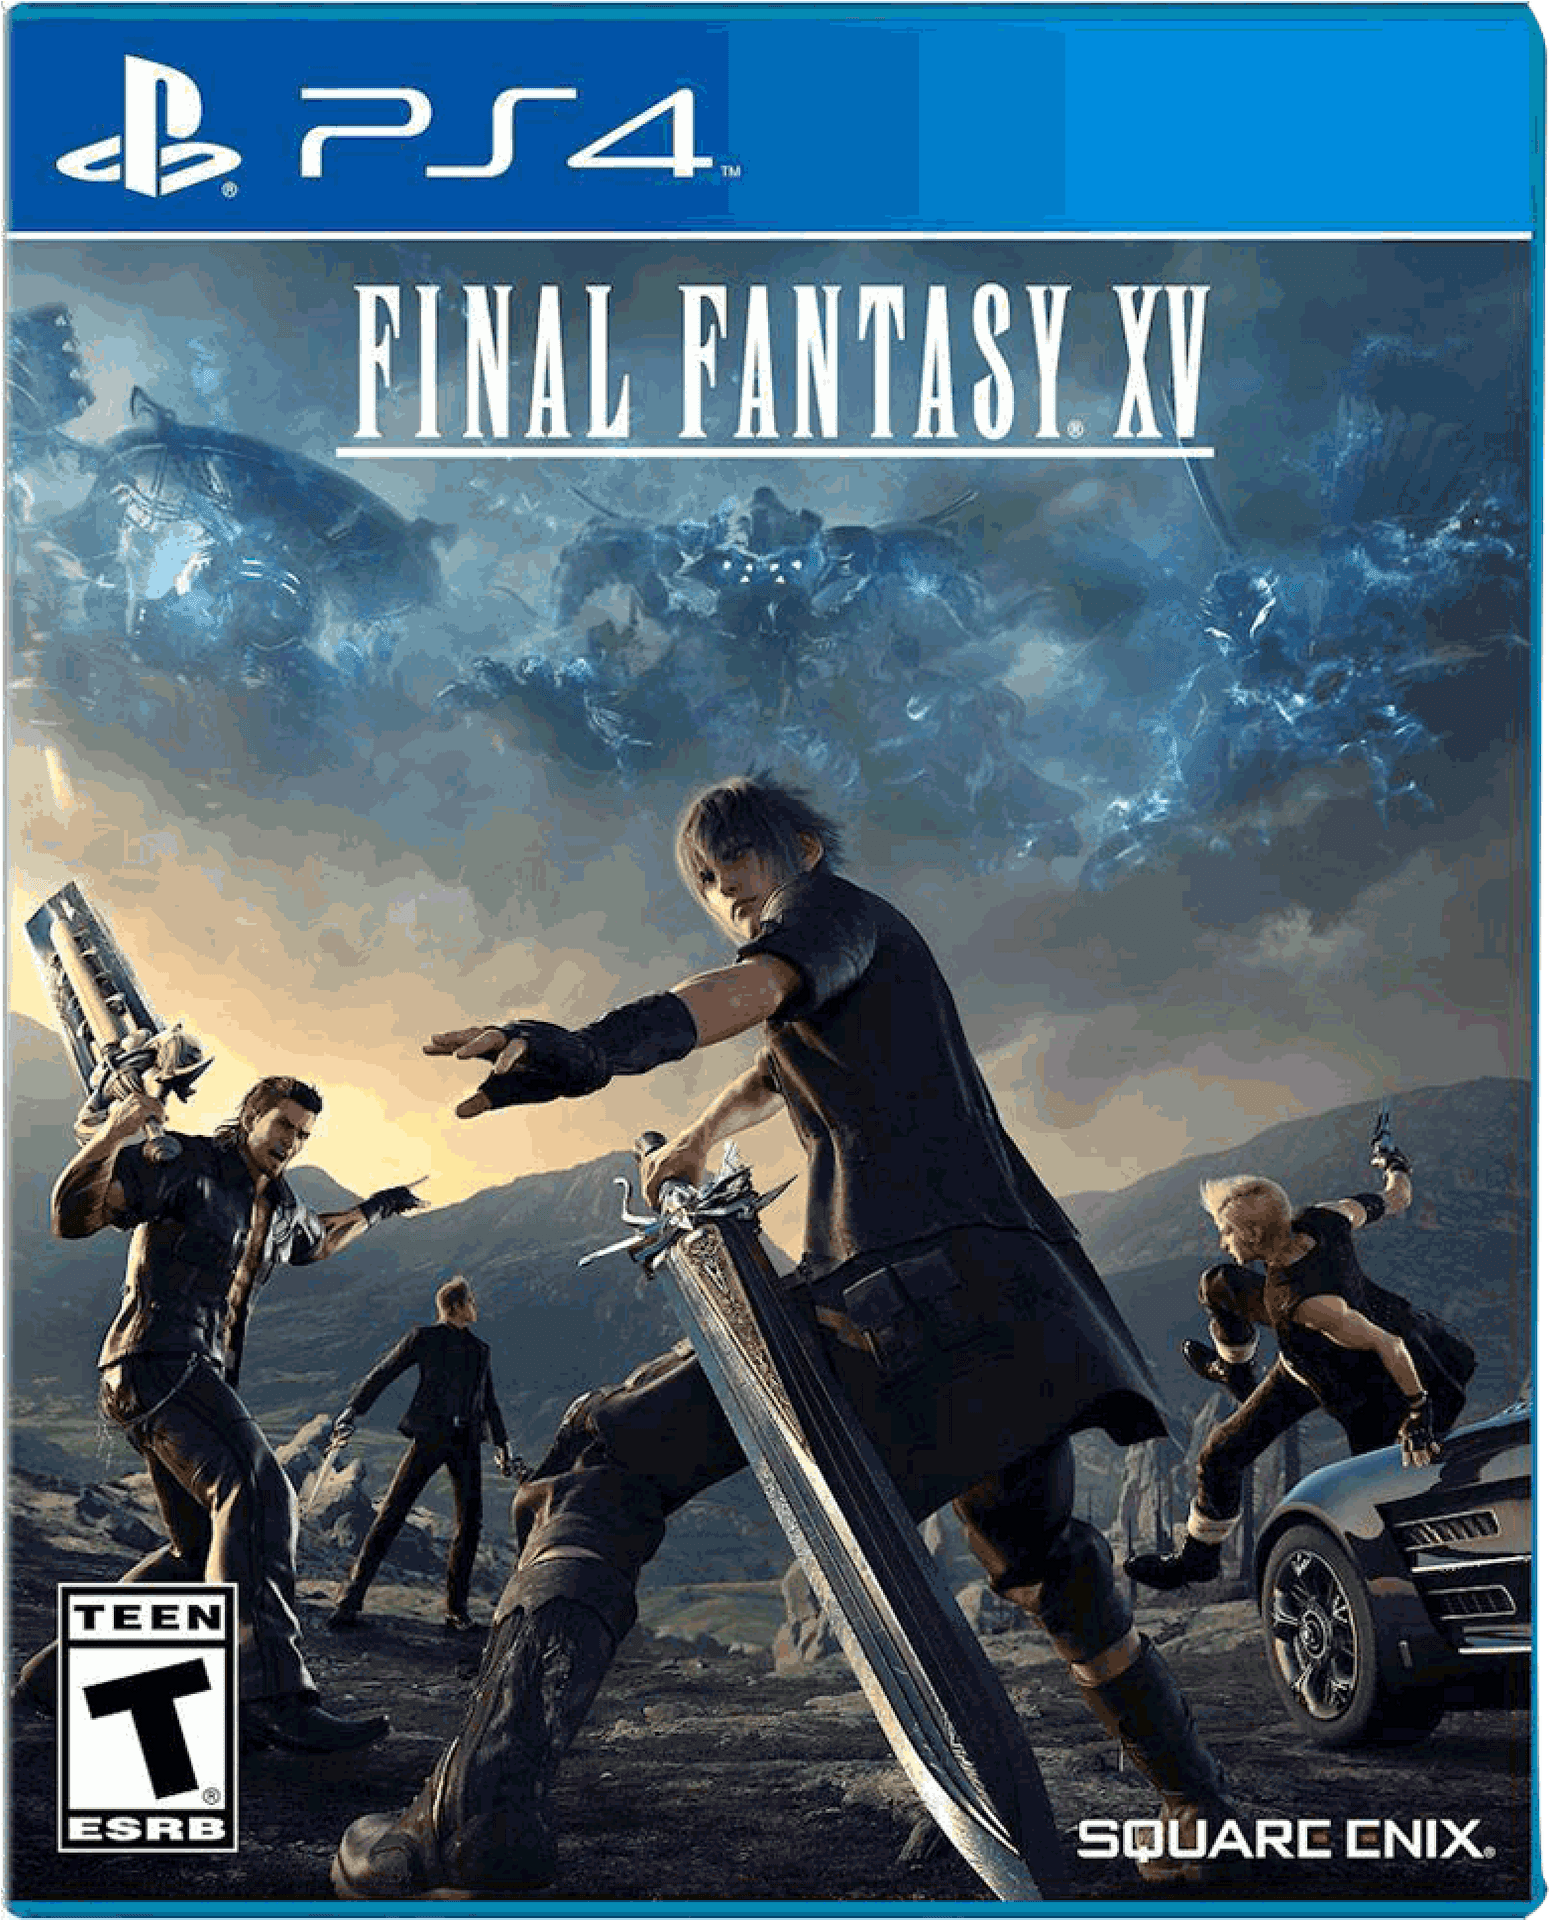 Final Fantasy X V P S4 Cover Art PNG